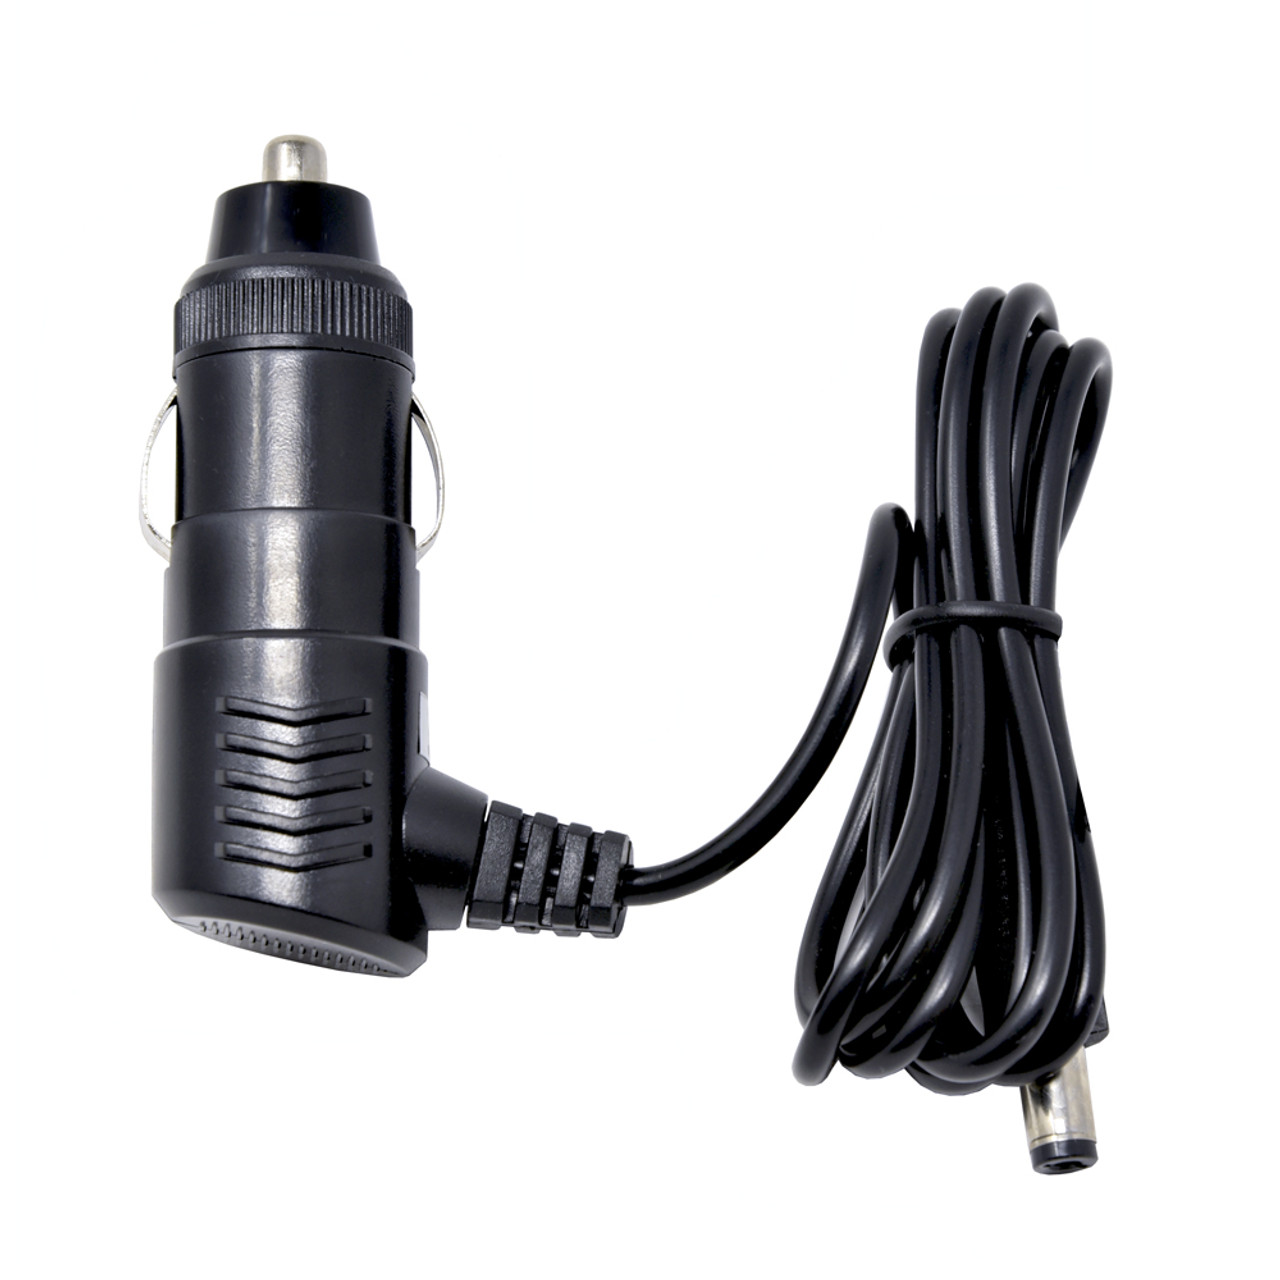 12V Cigarette Lighter Power Adapter For CC Vector Systems